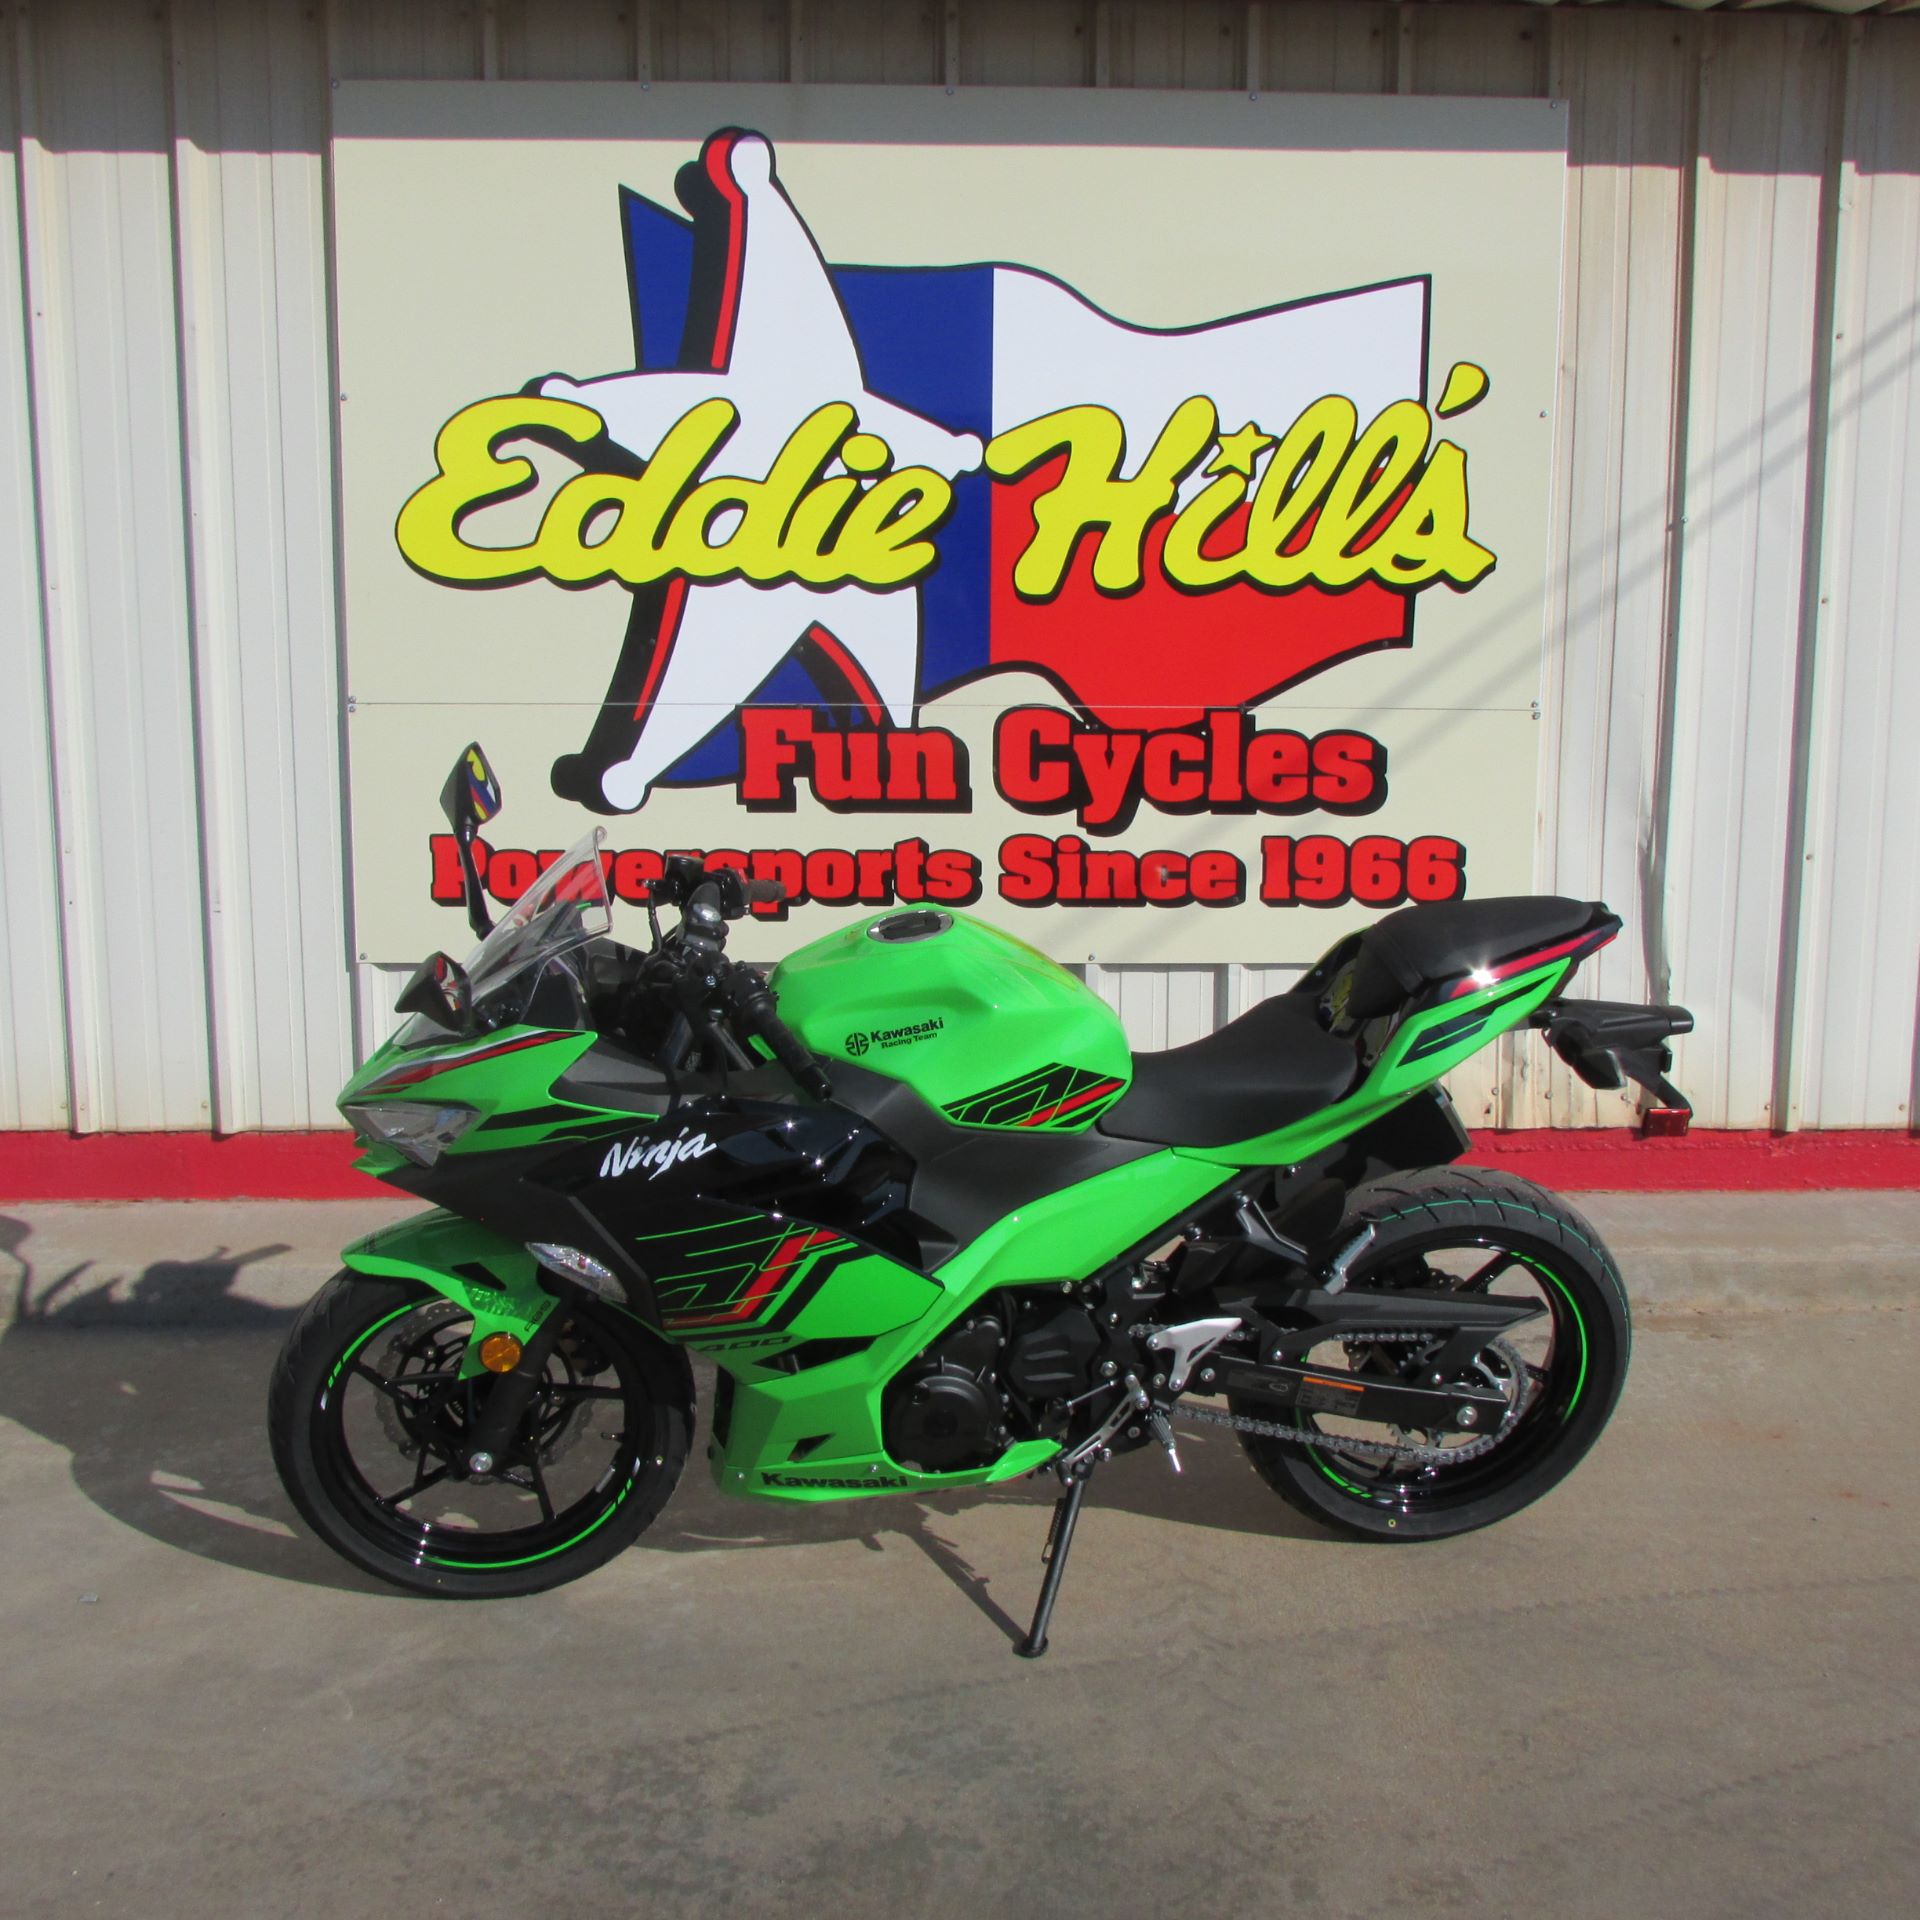 2023 Kawasaki Ninja 400 ABS KRT Edition in Wichita Falls, Texas - Photo 3